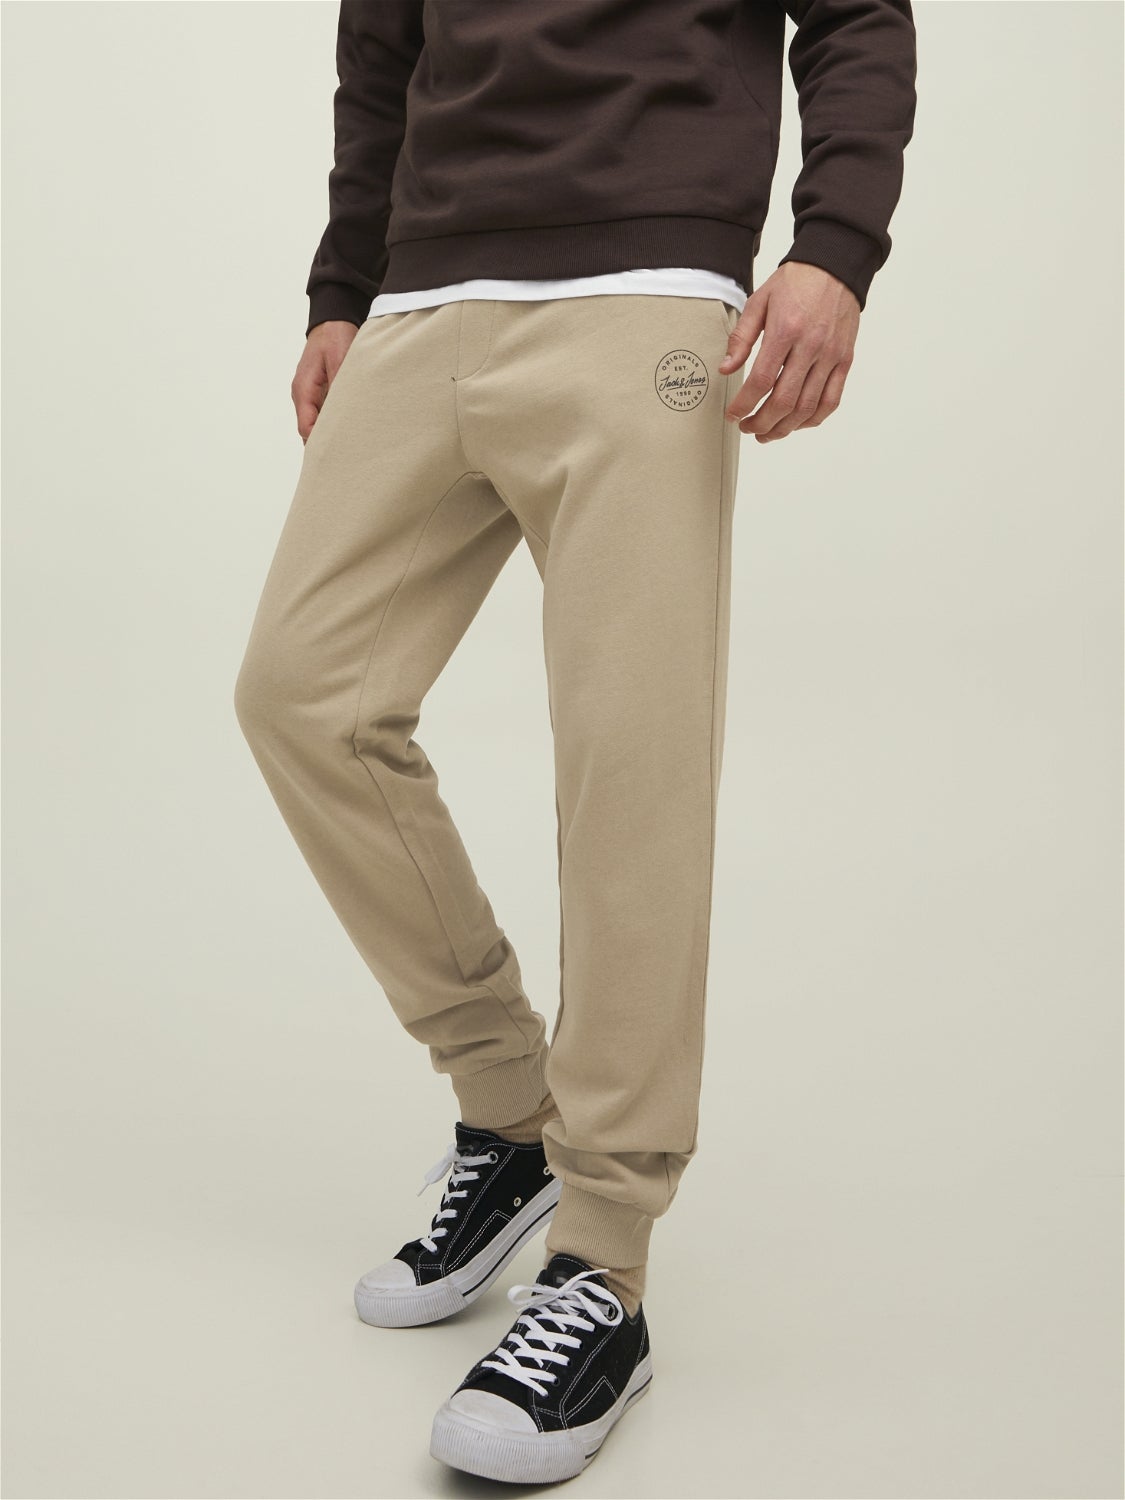 discount 56% MEN FASHION Trousers Elegant Jack & Jones slacks Beige S 